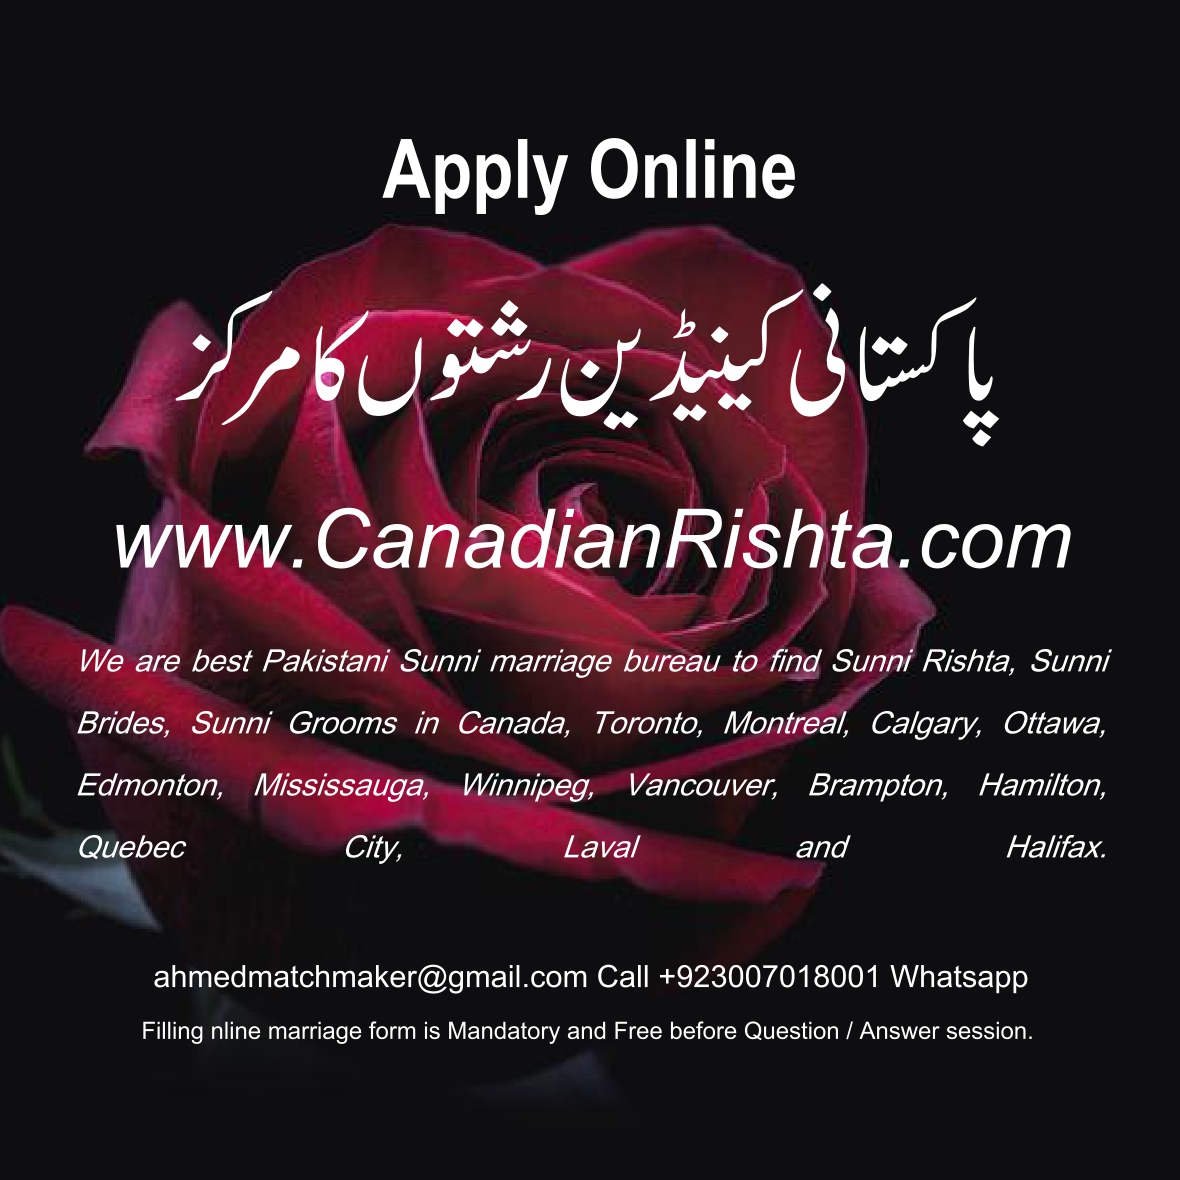 Pakistani-rishta-shaadi-marriage-bureau-Canada-Toronto-Montreal-Calgary-Ottawa-Vancouver-Brampton-Hamilton-Quebec-4.jpg